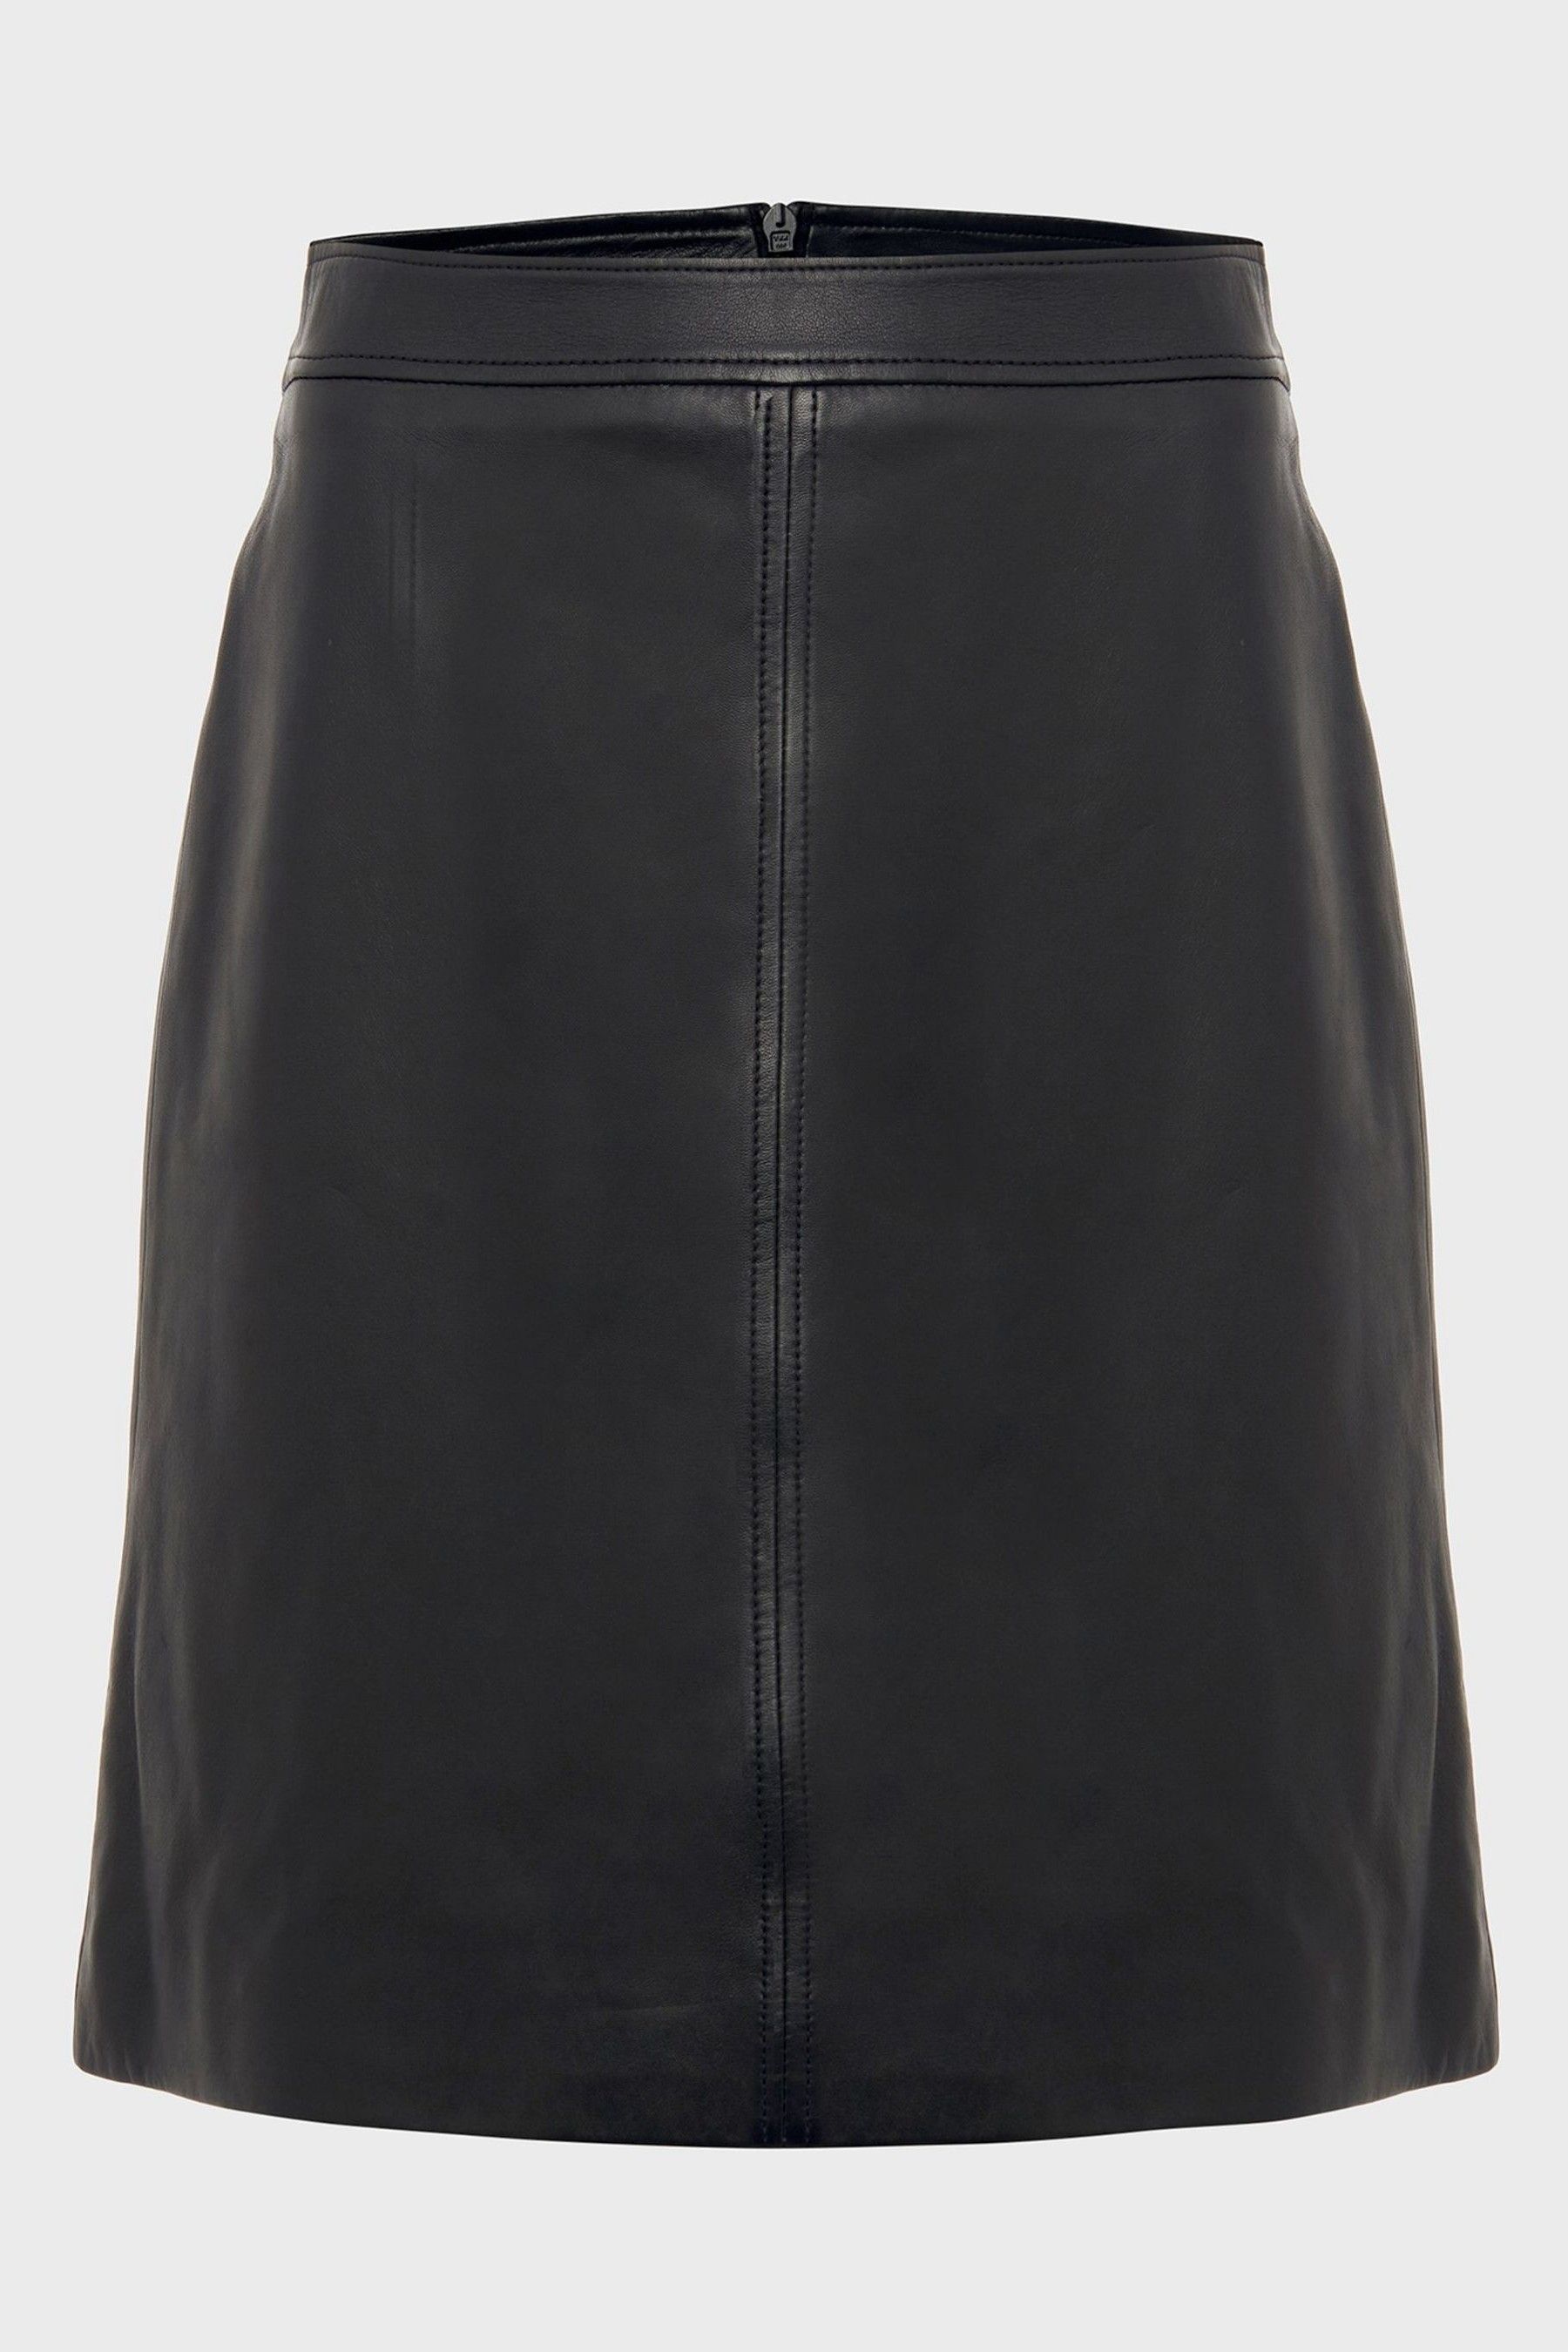 Buy Hobbs Annalise Black Skirt from Next Ireland